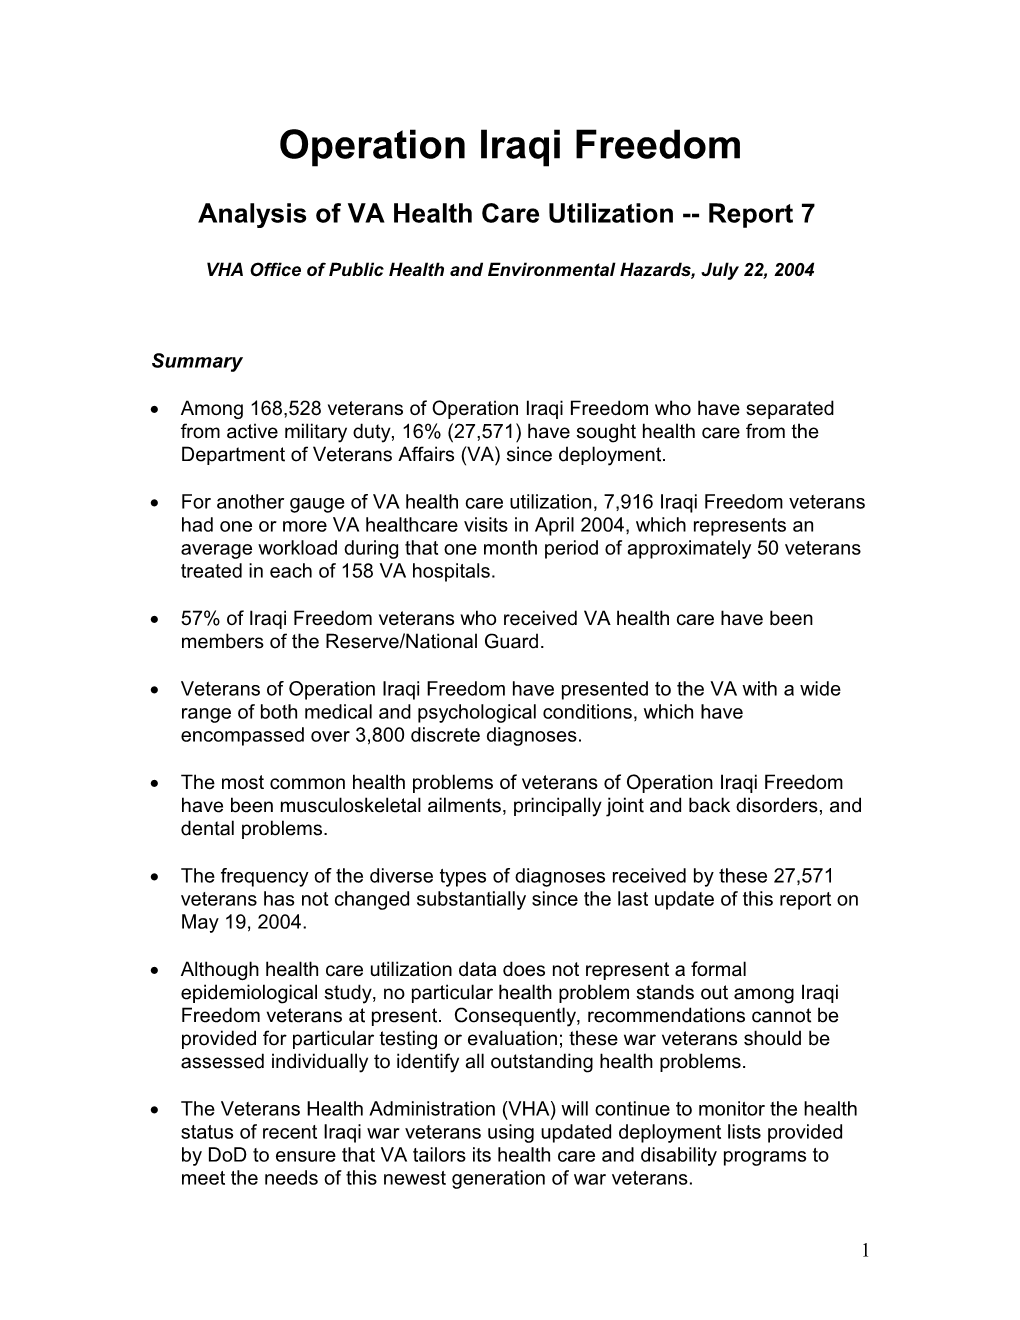 Summary of Operation Iraqi Freedom Veterans and Their VA Health Care